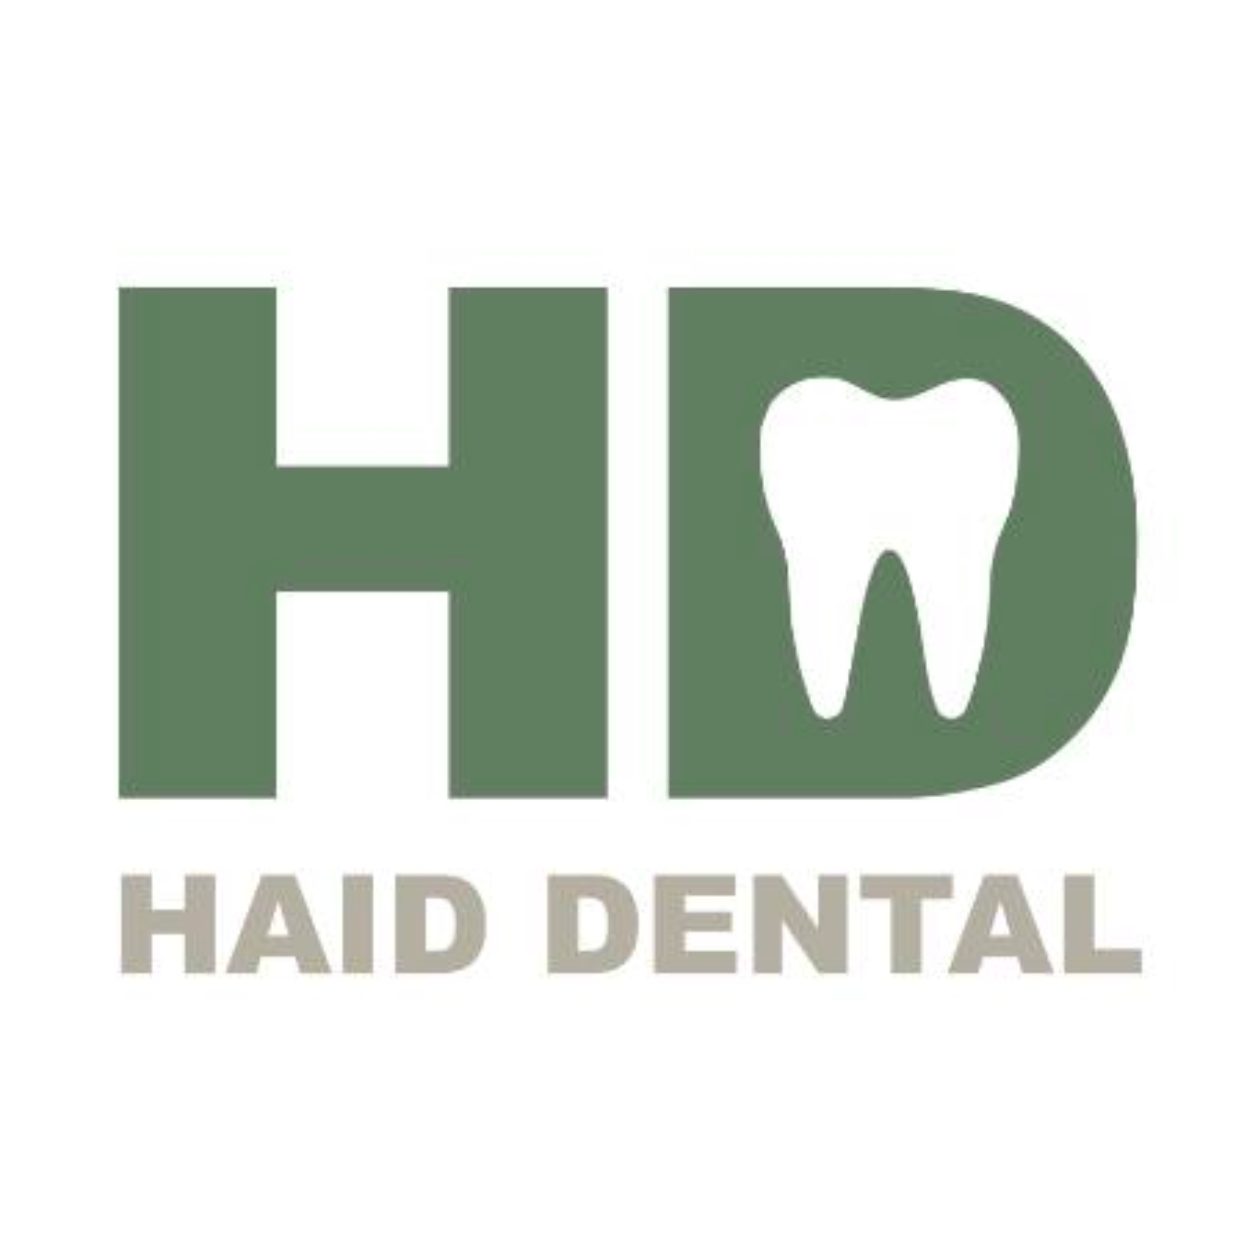 Haid Dental - Worthington, OH 43085 - (614)739-0536 | ShowMeLocal.com